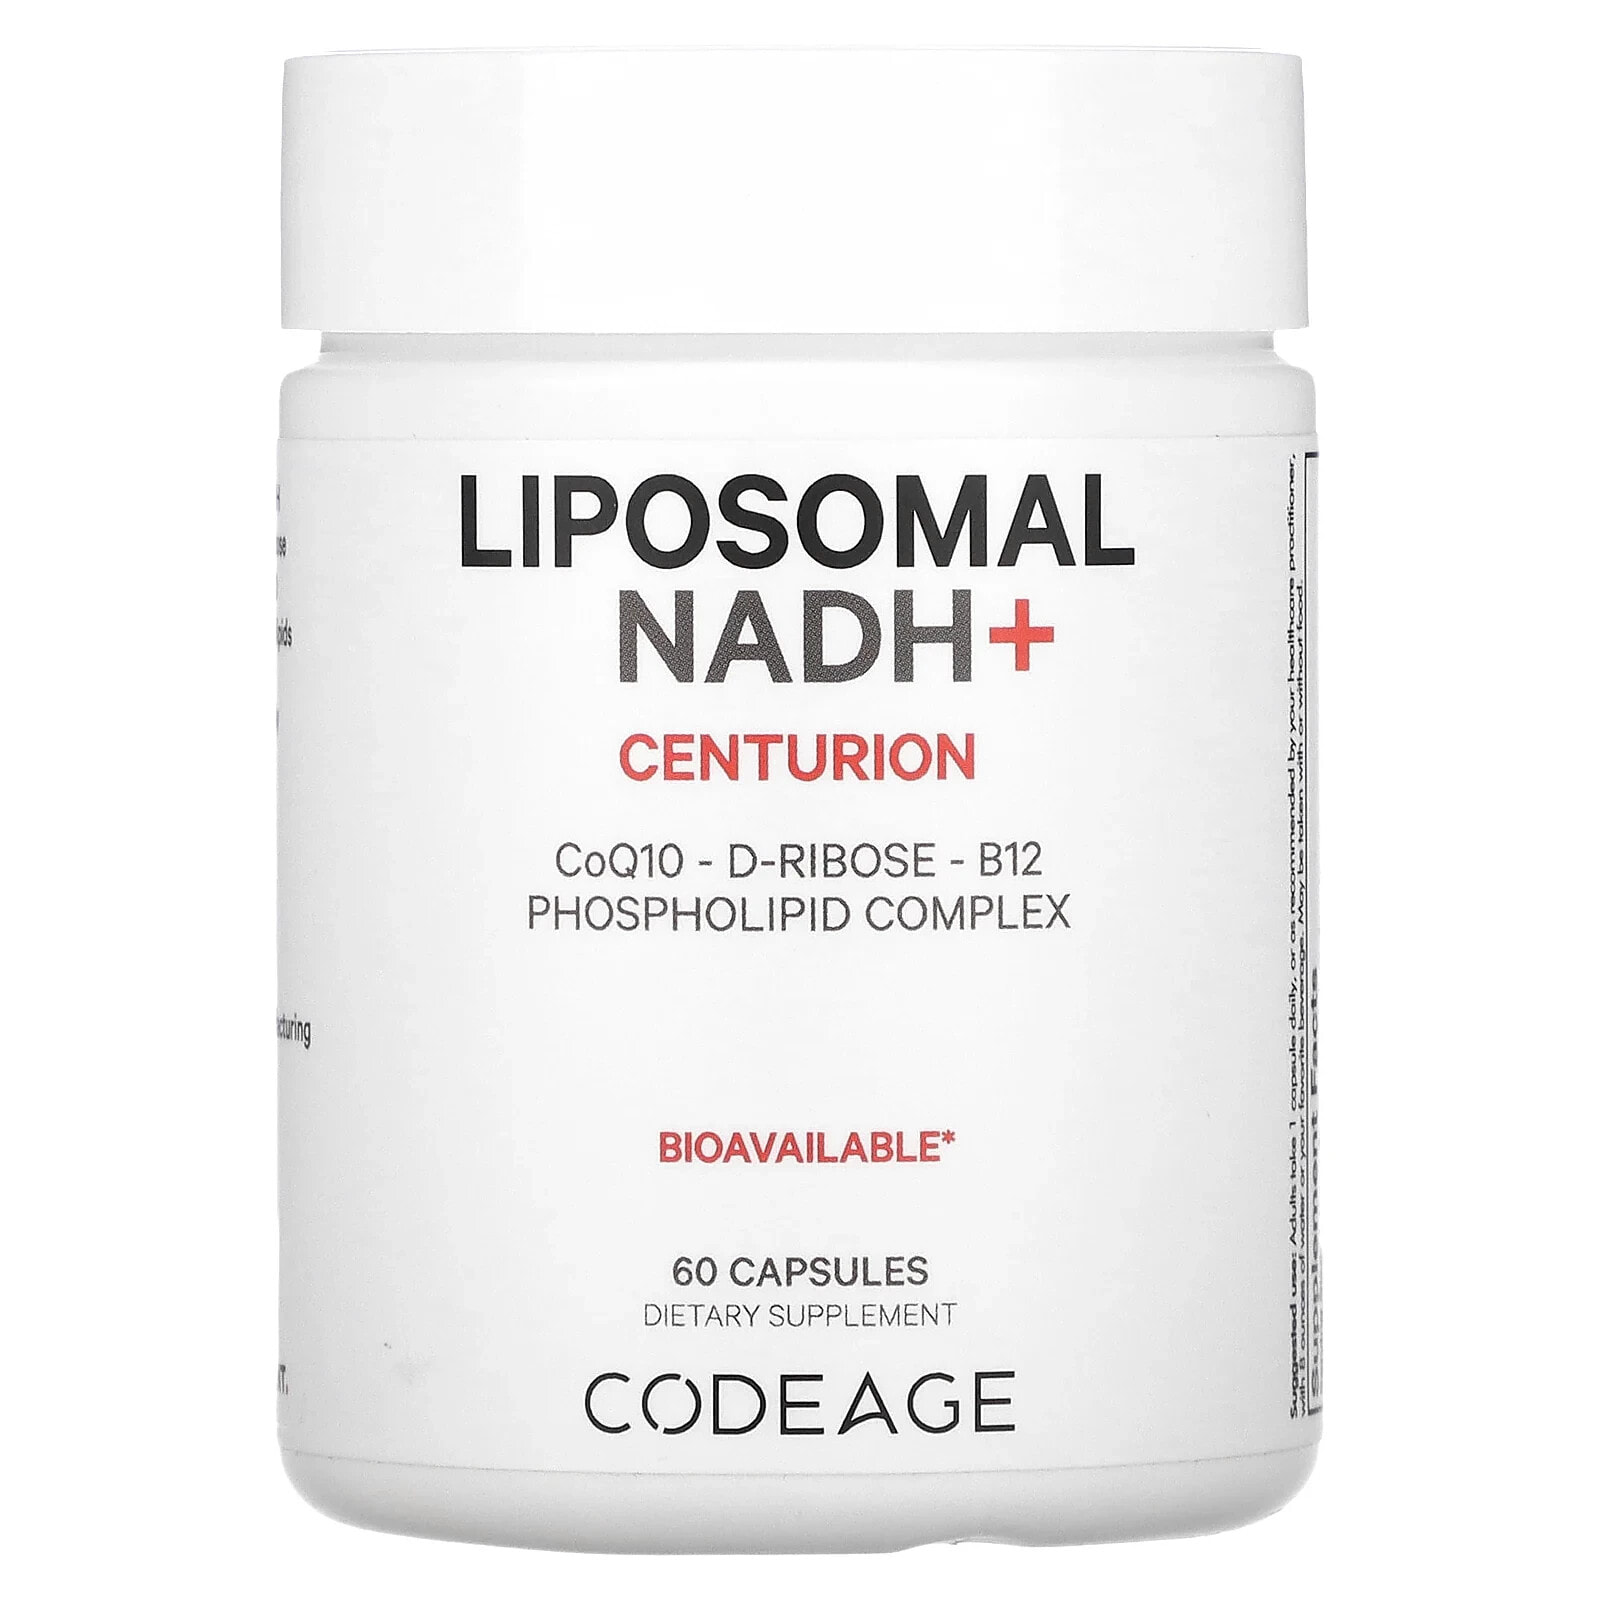 Codeage, Liposomal NADH+, Centurion, 60 Capsules